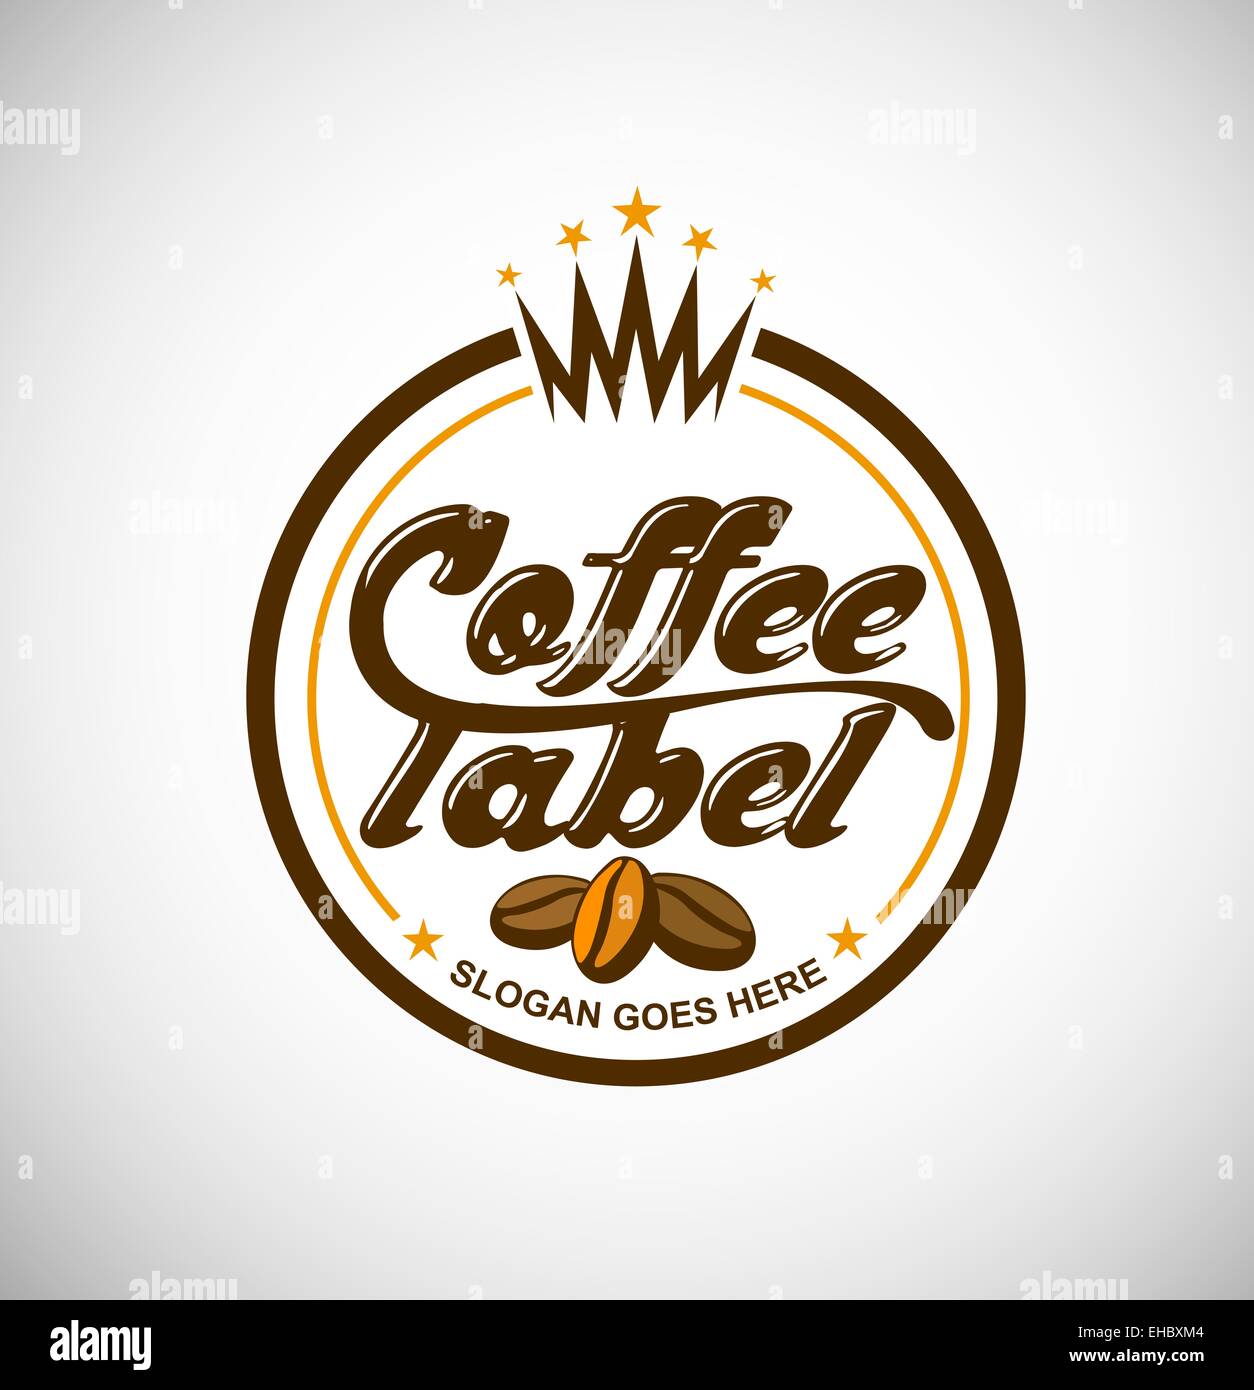 https://c8.alamy.com/comp/EHBXM4/coffee-logo-vector-creative-label-for-a-a-coffee-business-EHBXM4.jpg